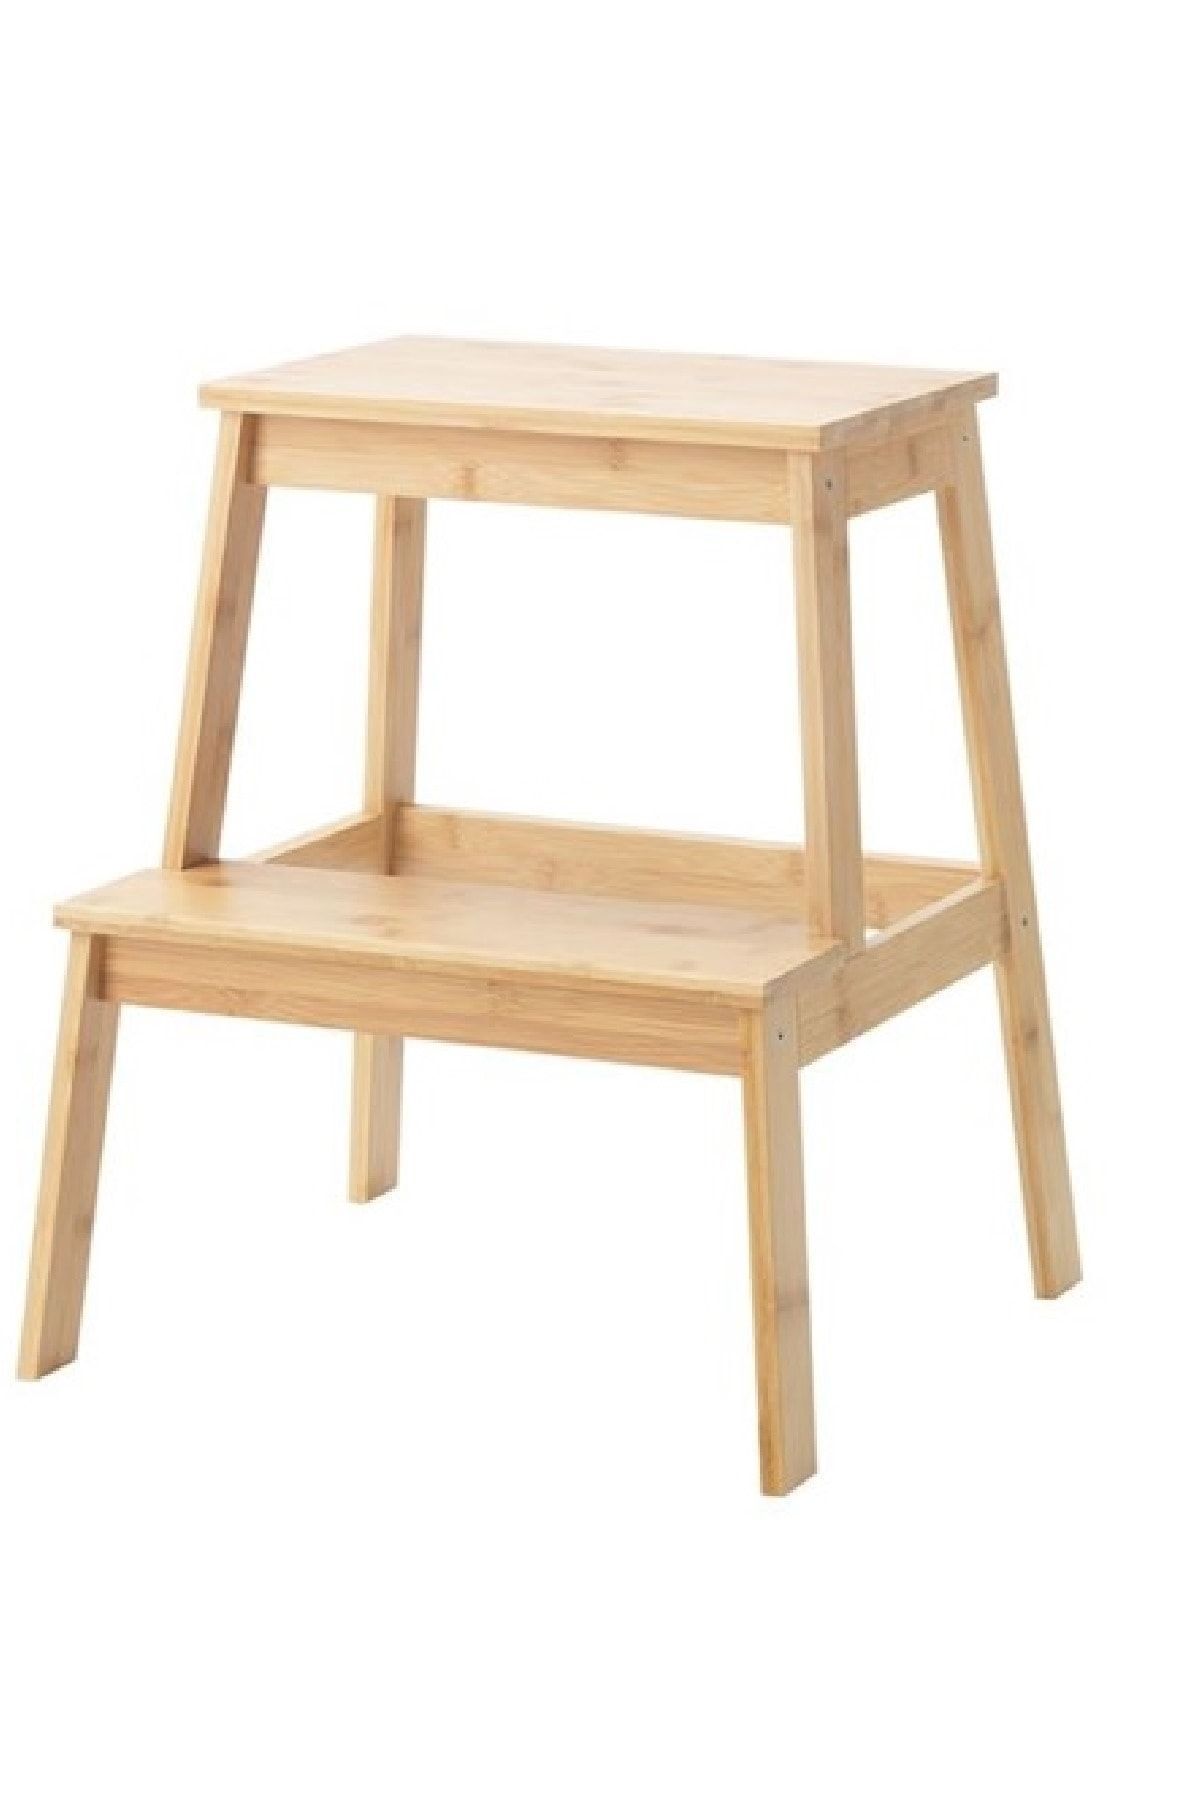 IKEA Tenhult Basamaklı Mutfak Tabure Merdiven Bambu Vernikli